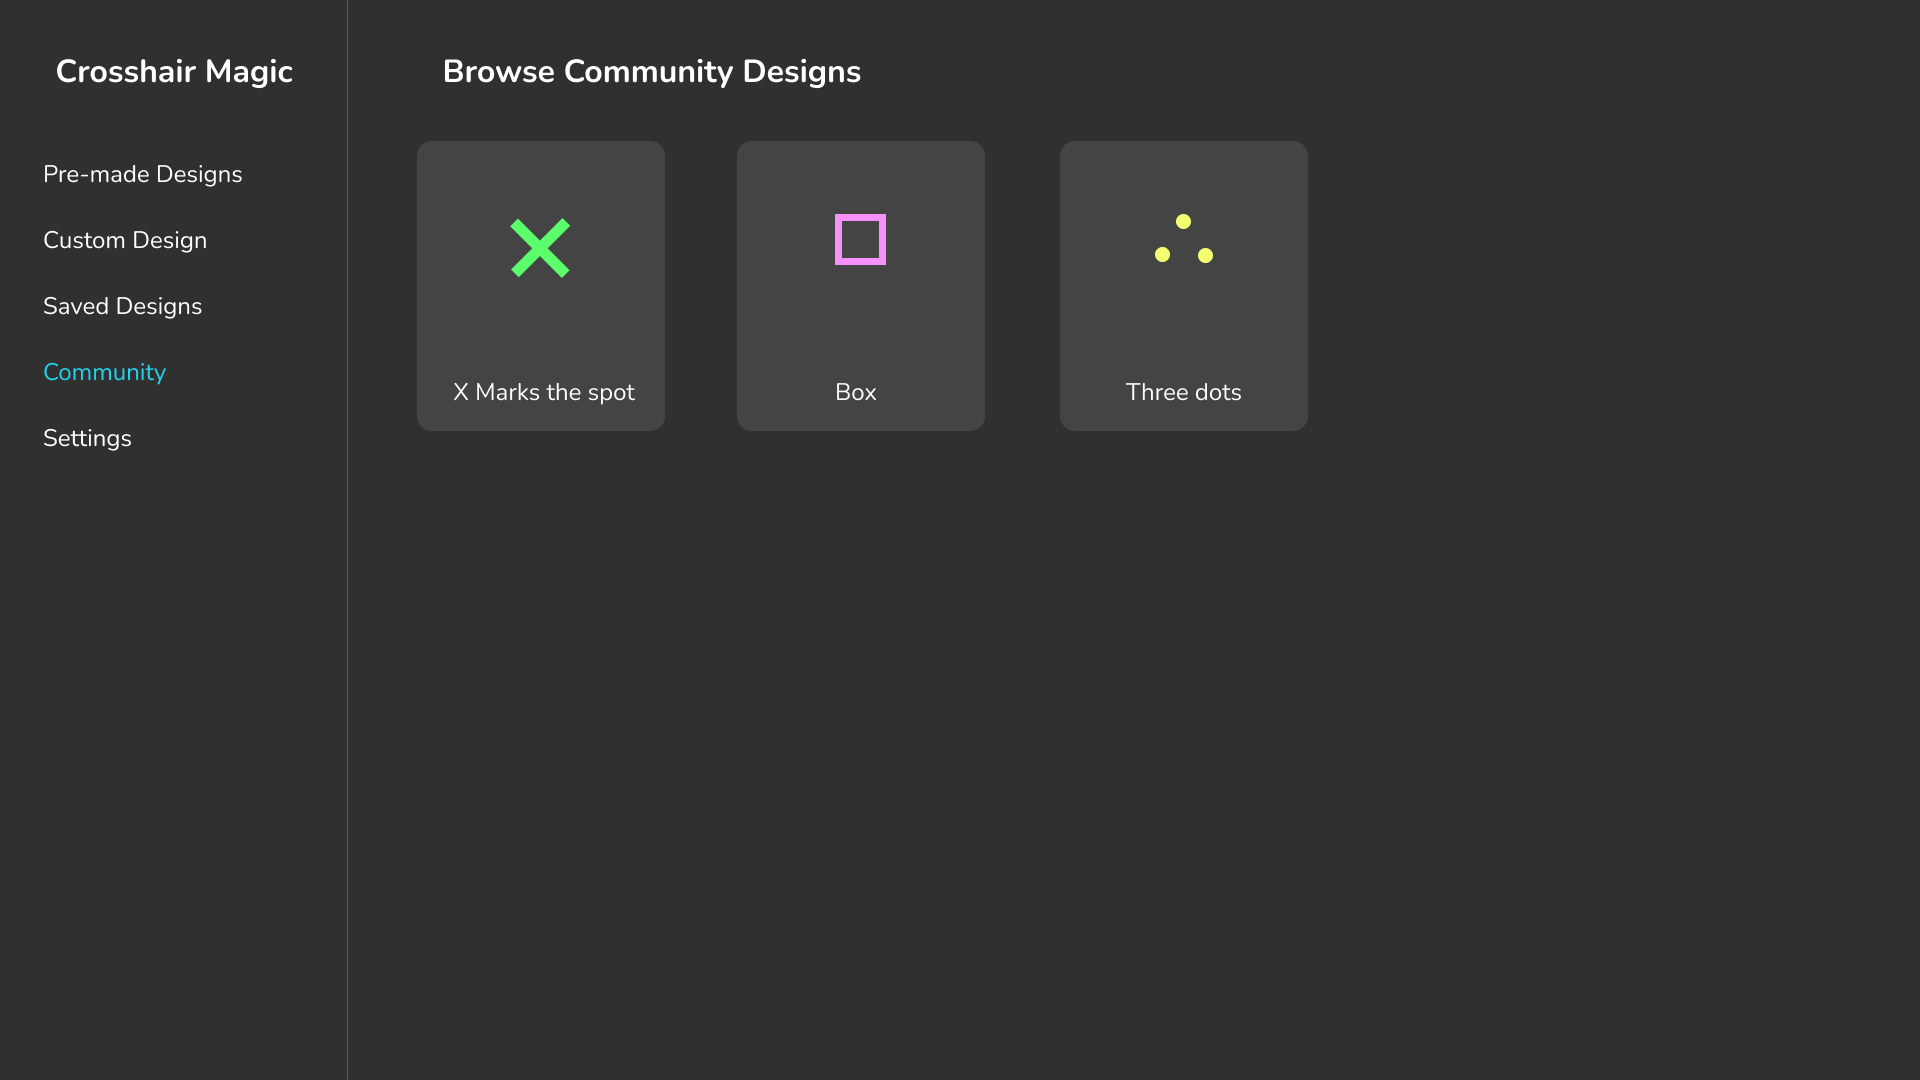 Community designs